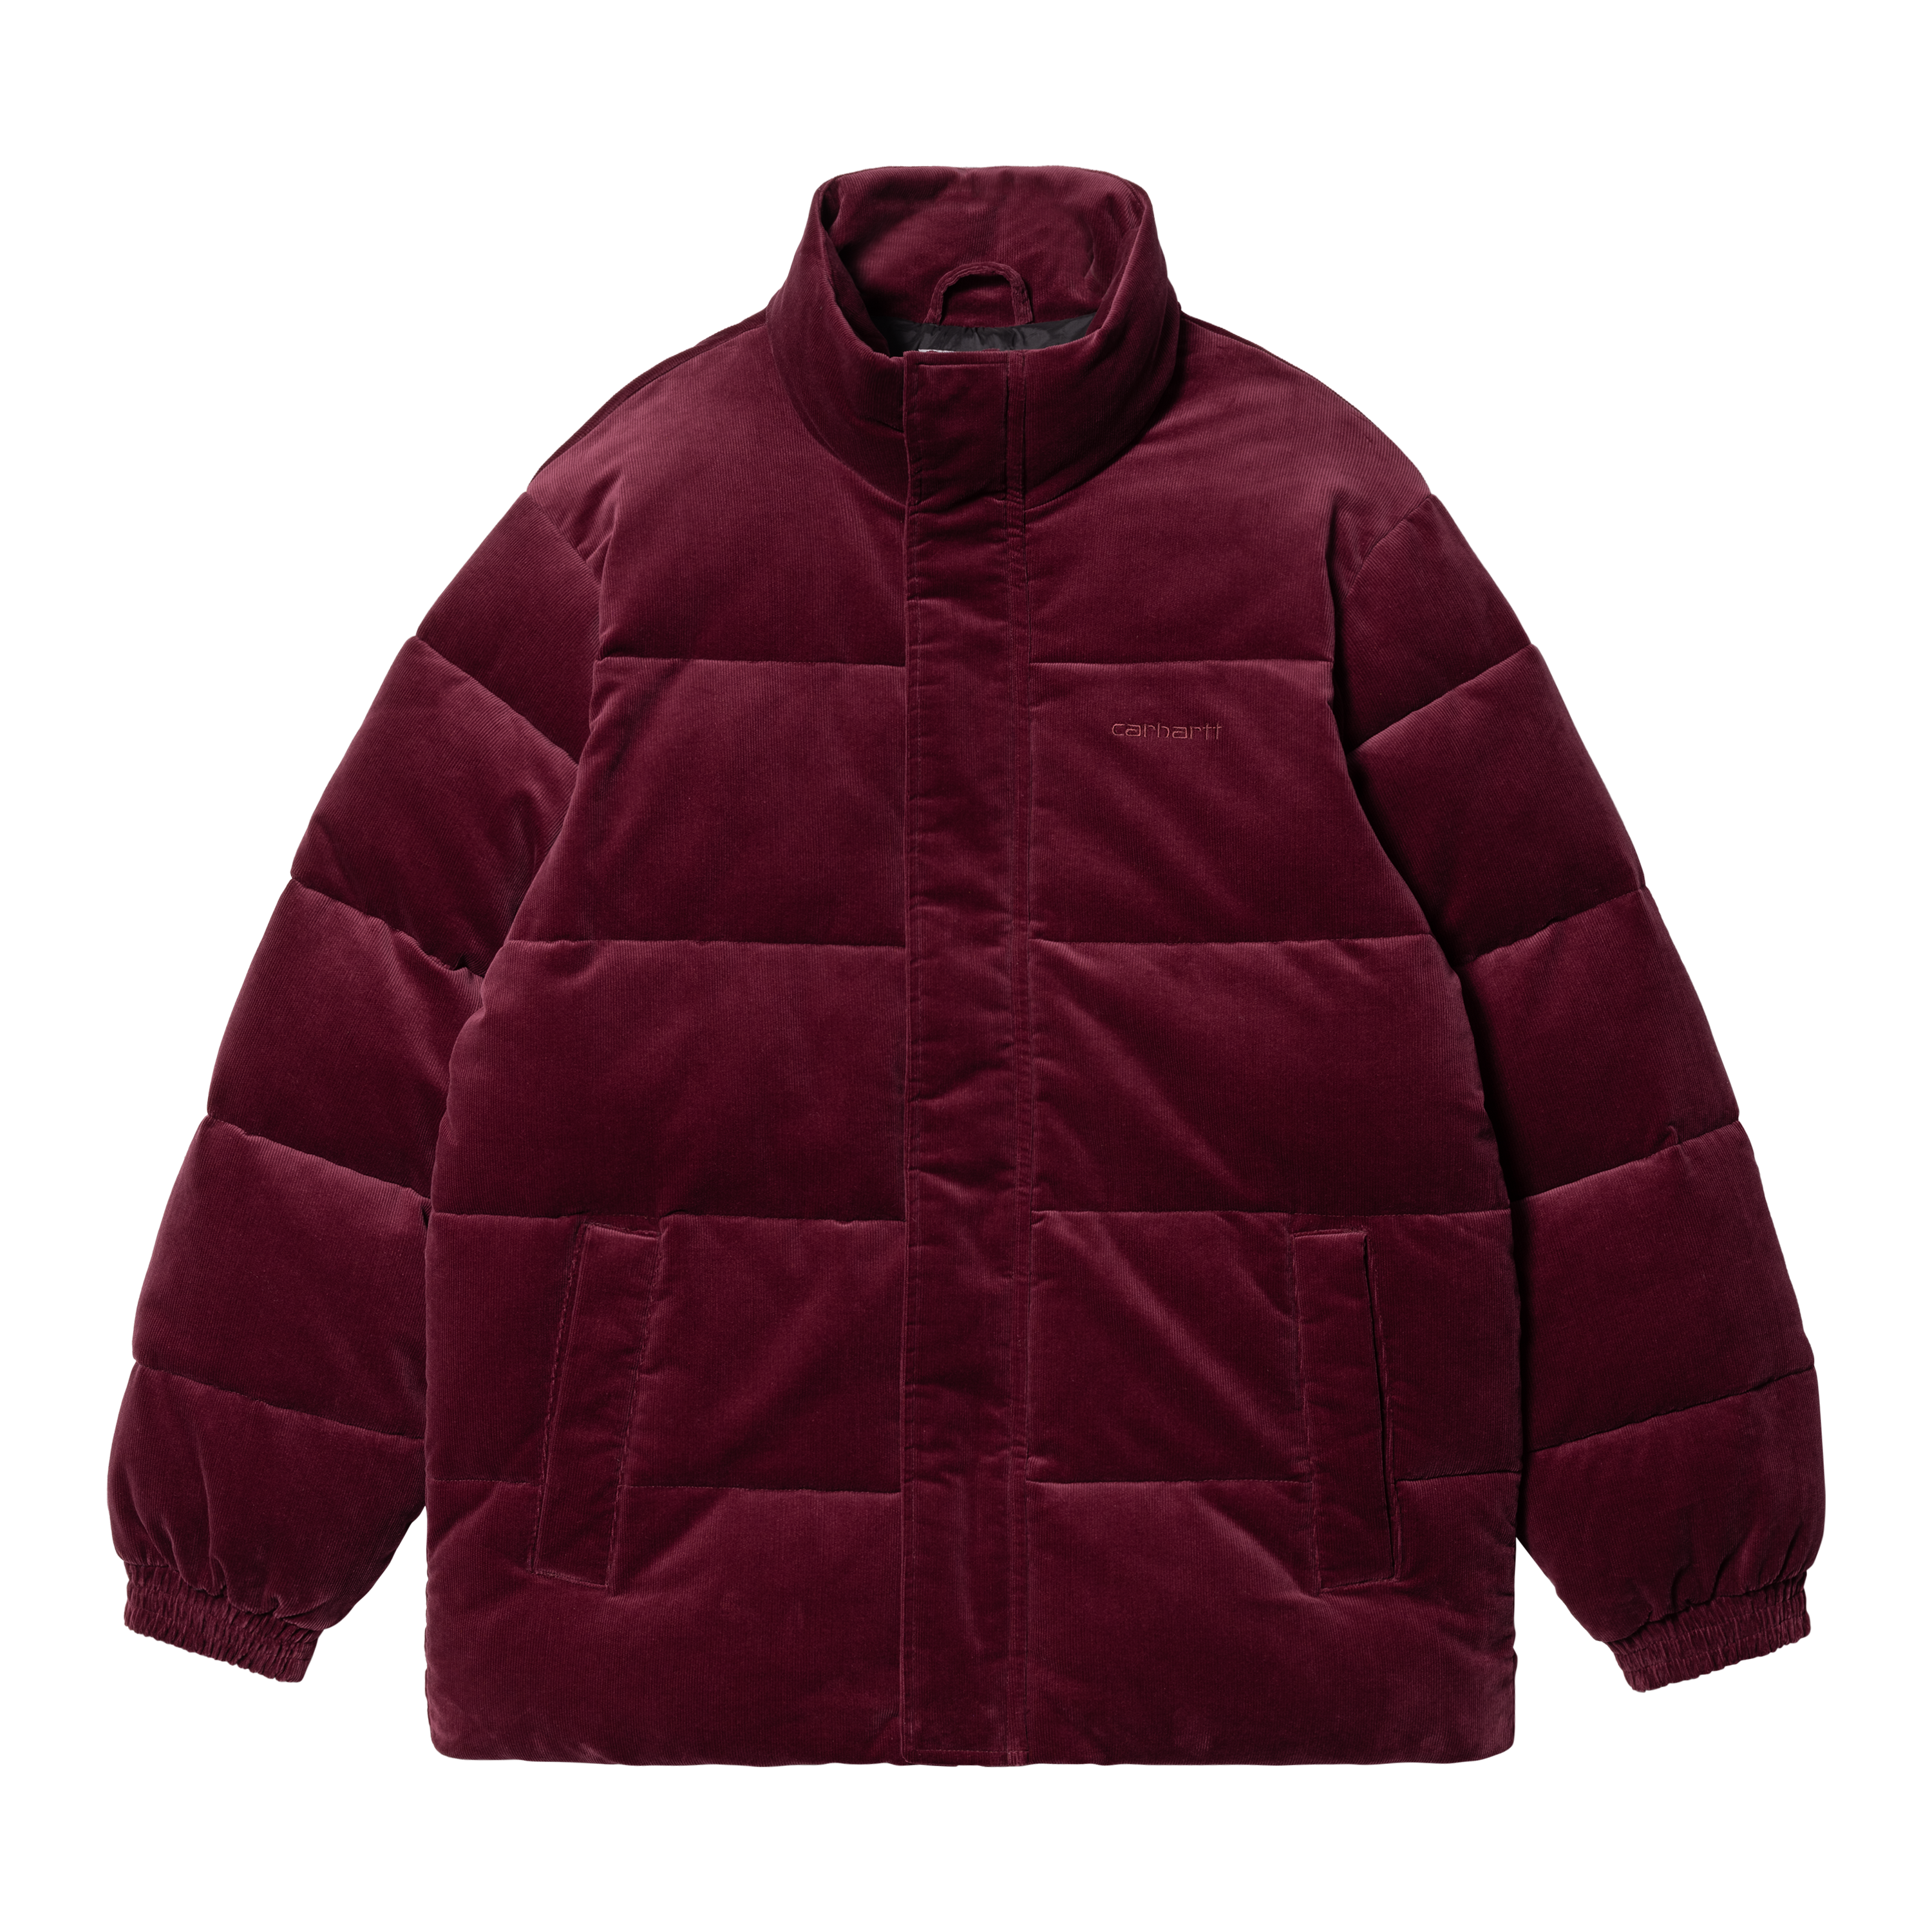 Carhartt WIP Layton Jacket in Rosso